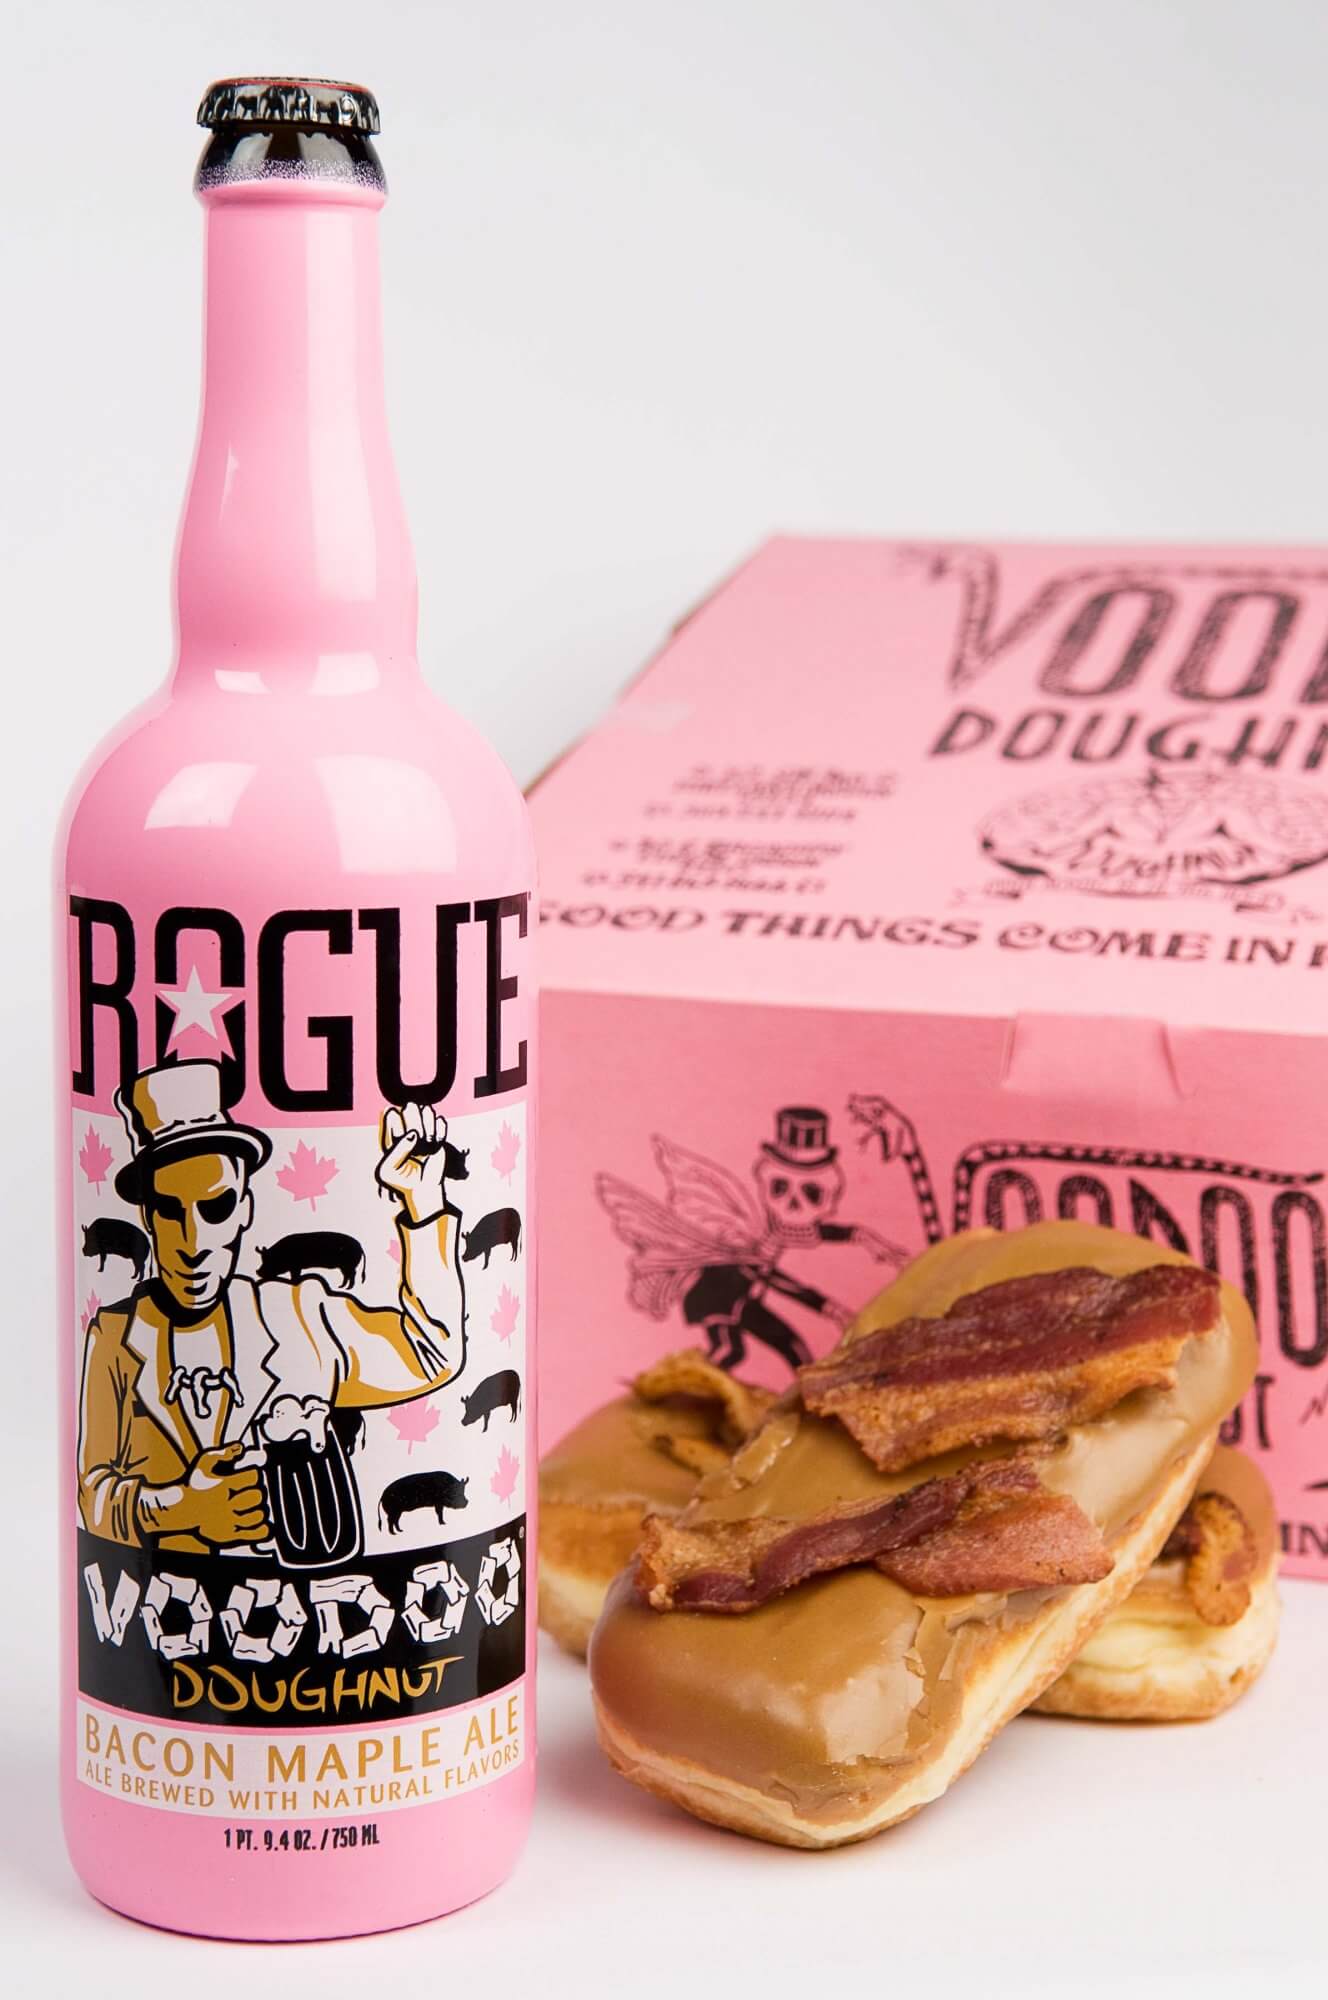 rogue-voodoo-doughnut-bacon-maple-ale-1328x2000.jpg